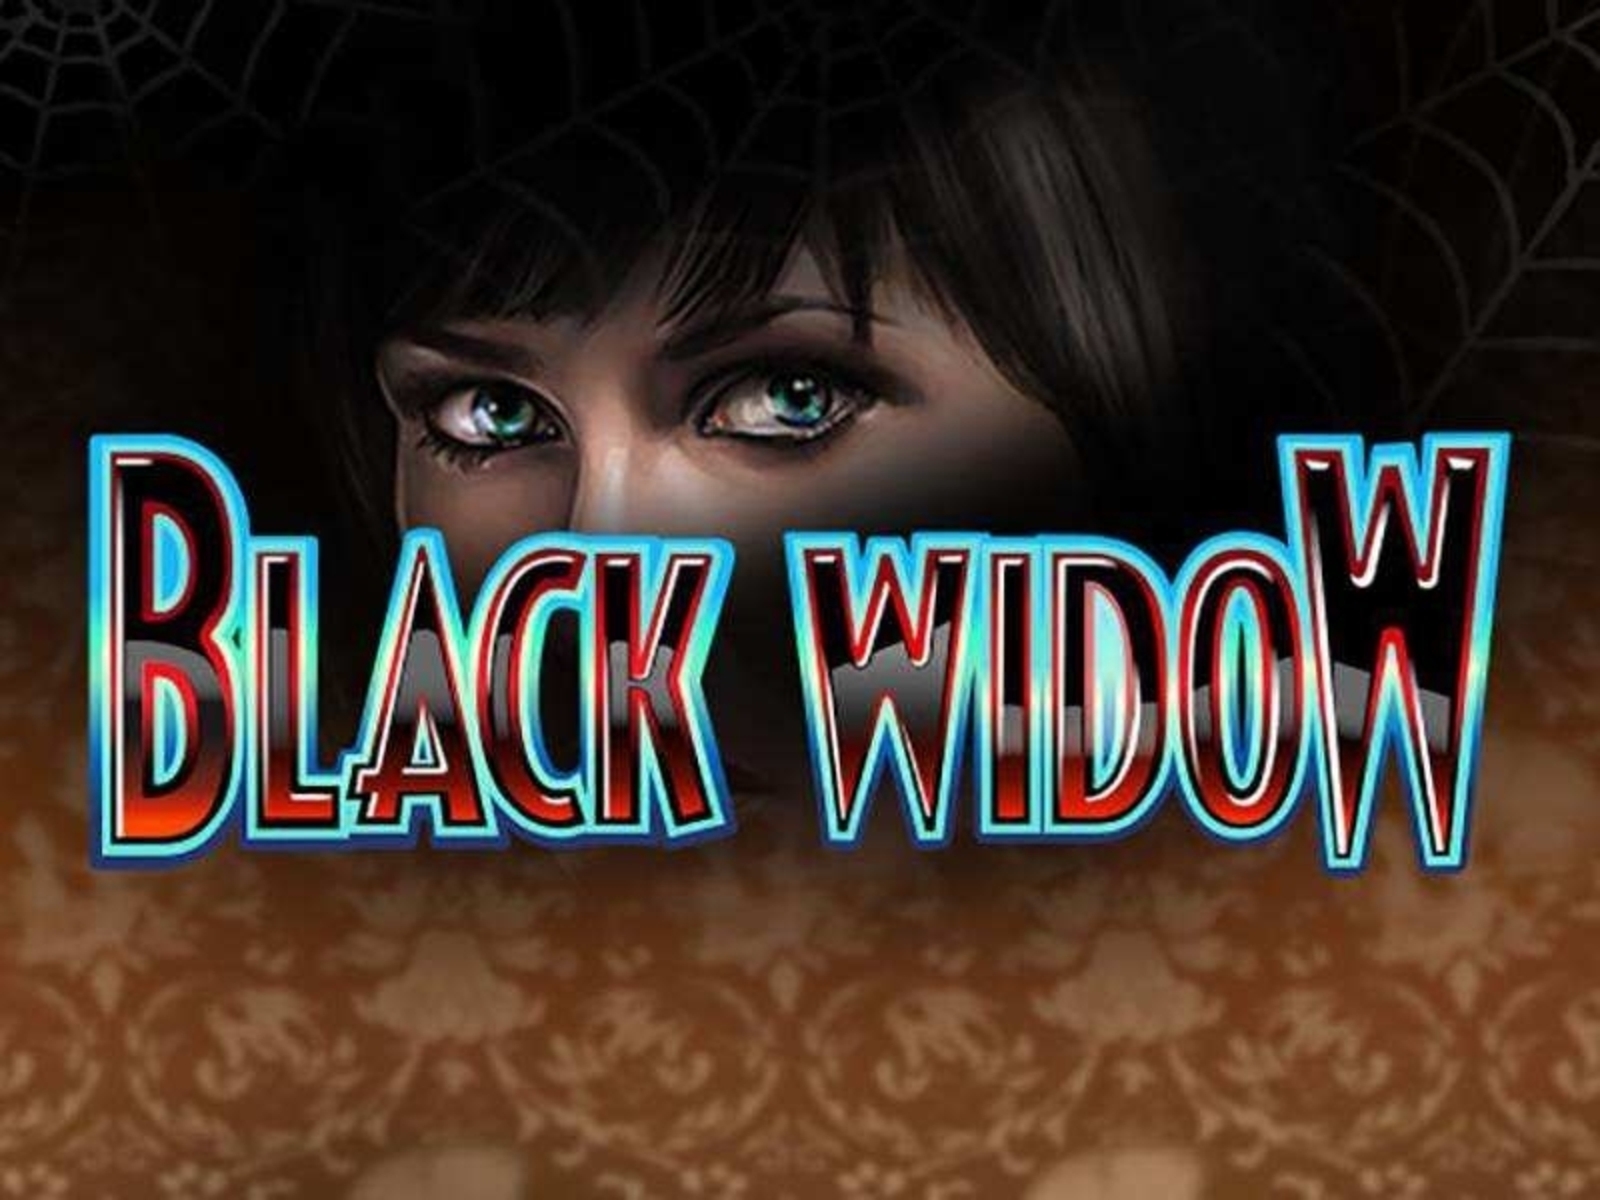 Black Widow demo